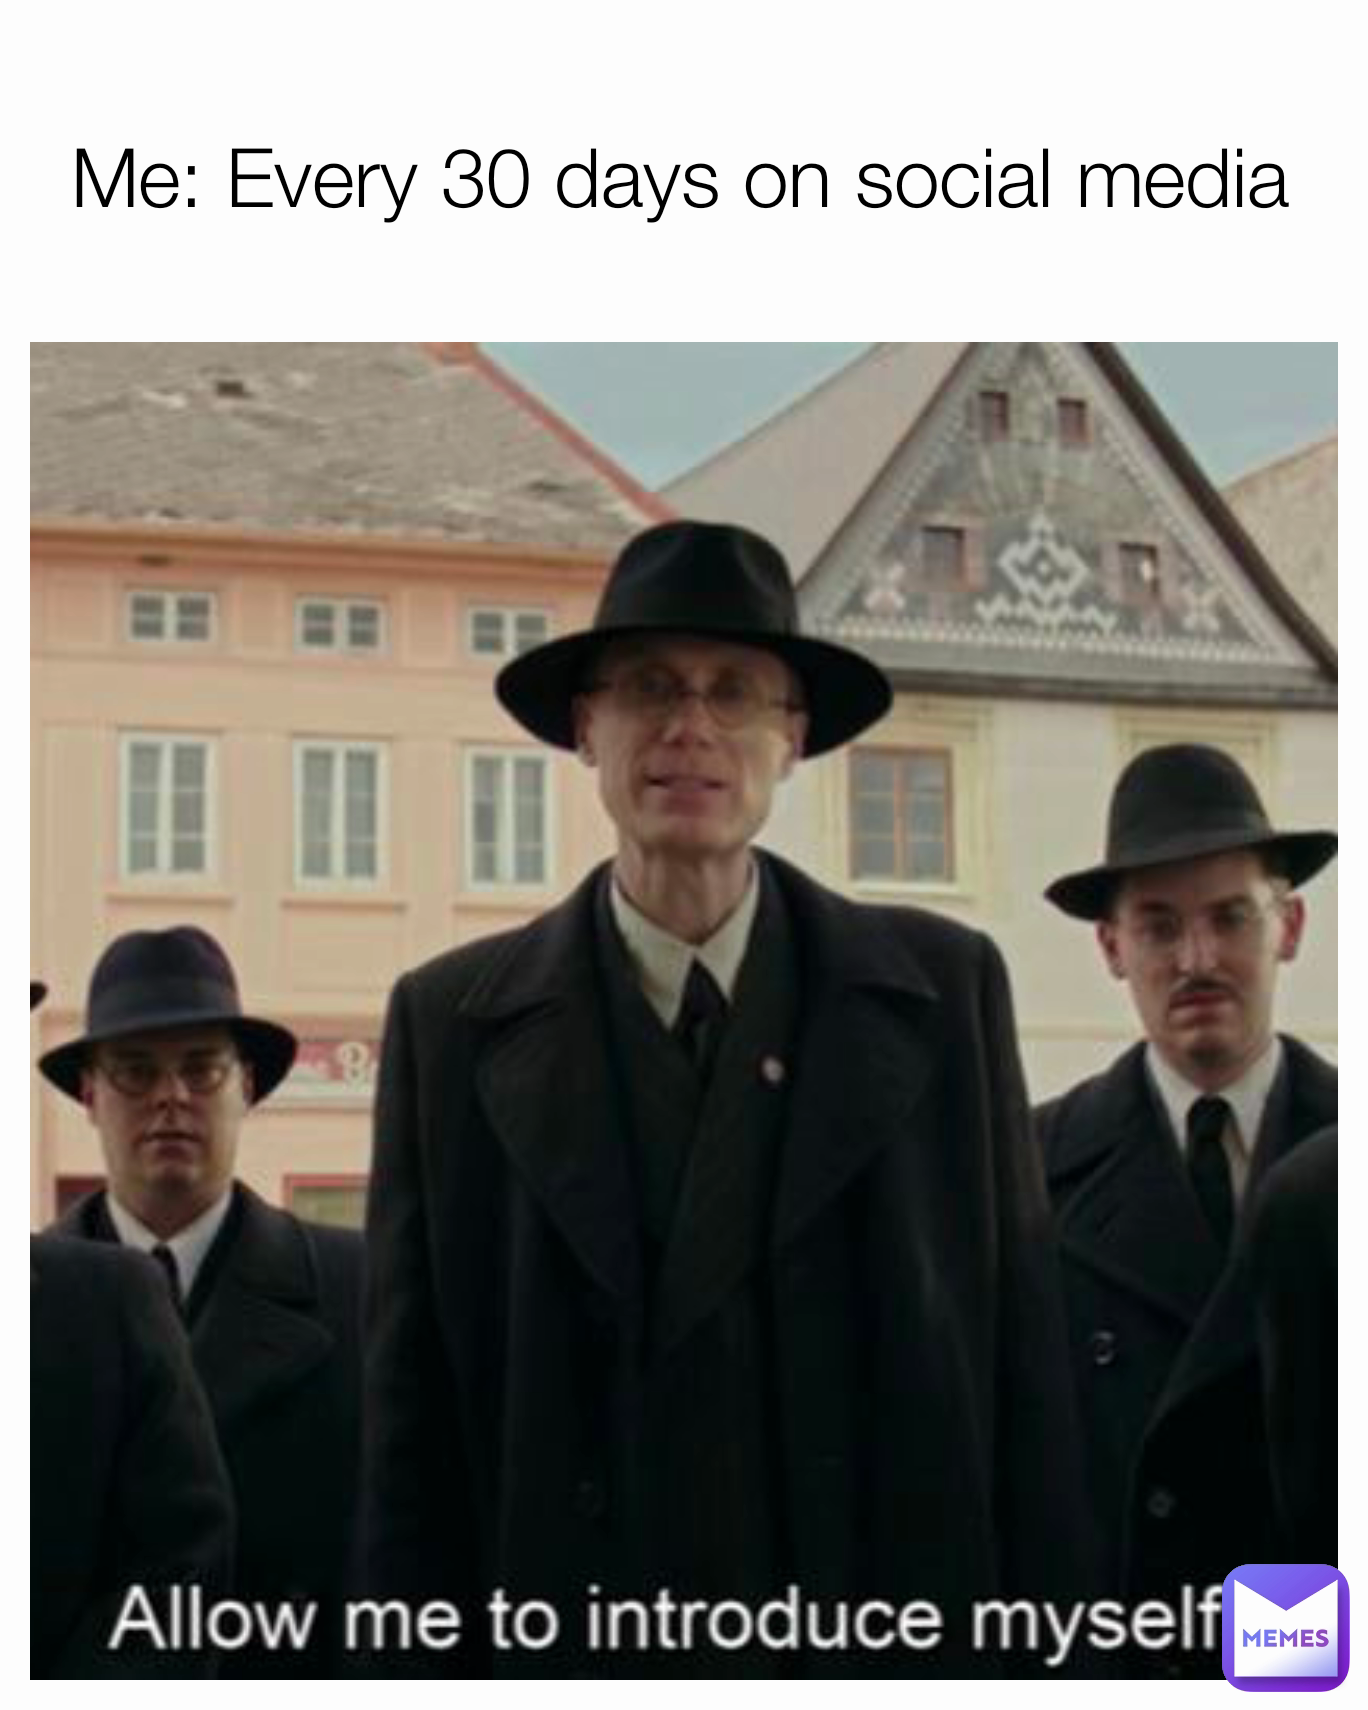 Me: Every 30 days on social media